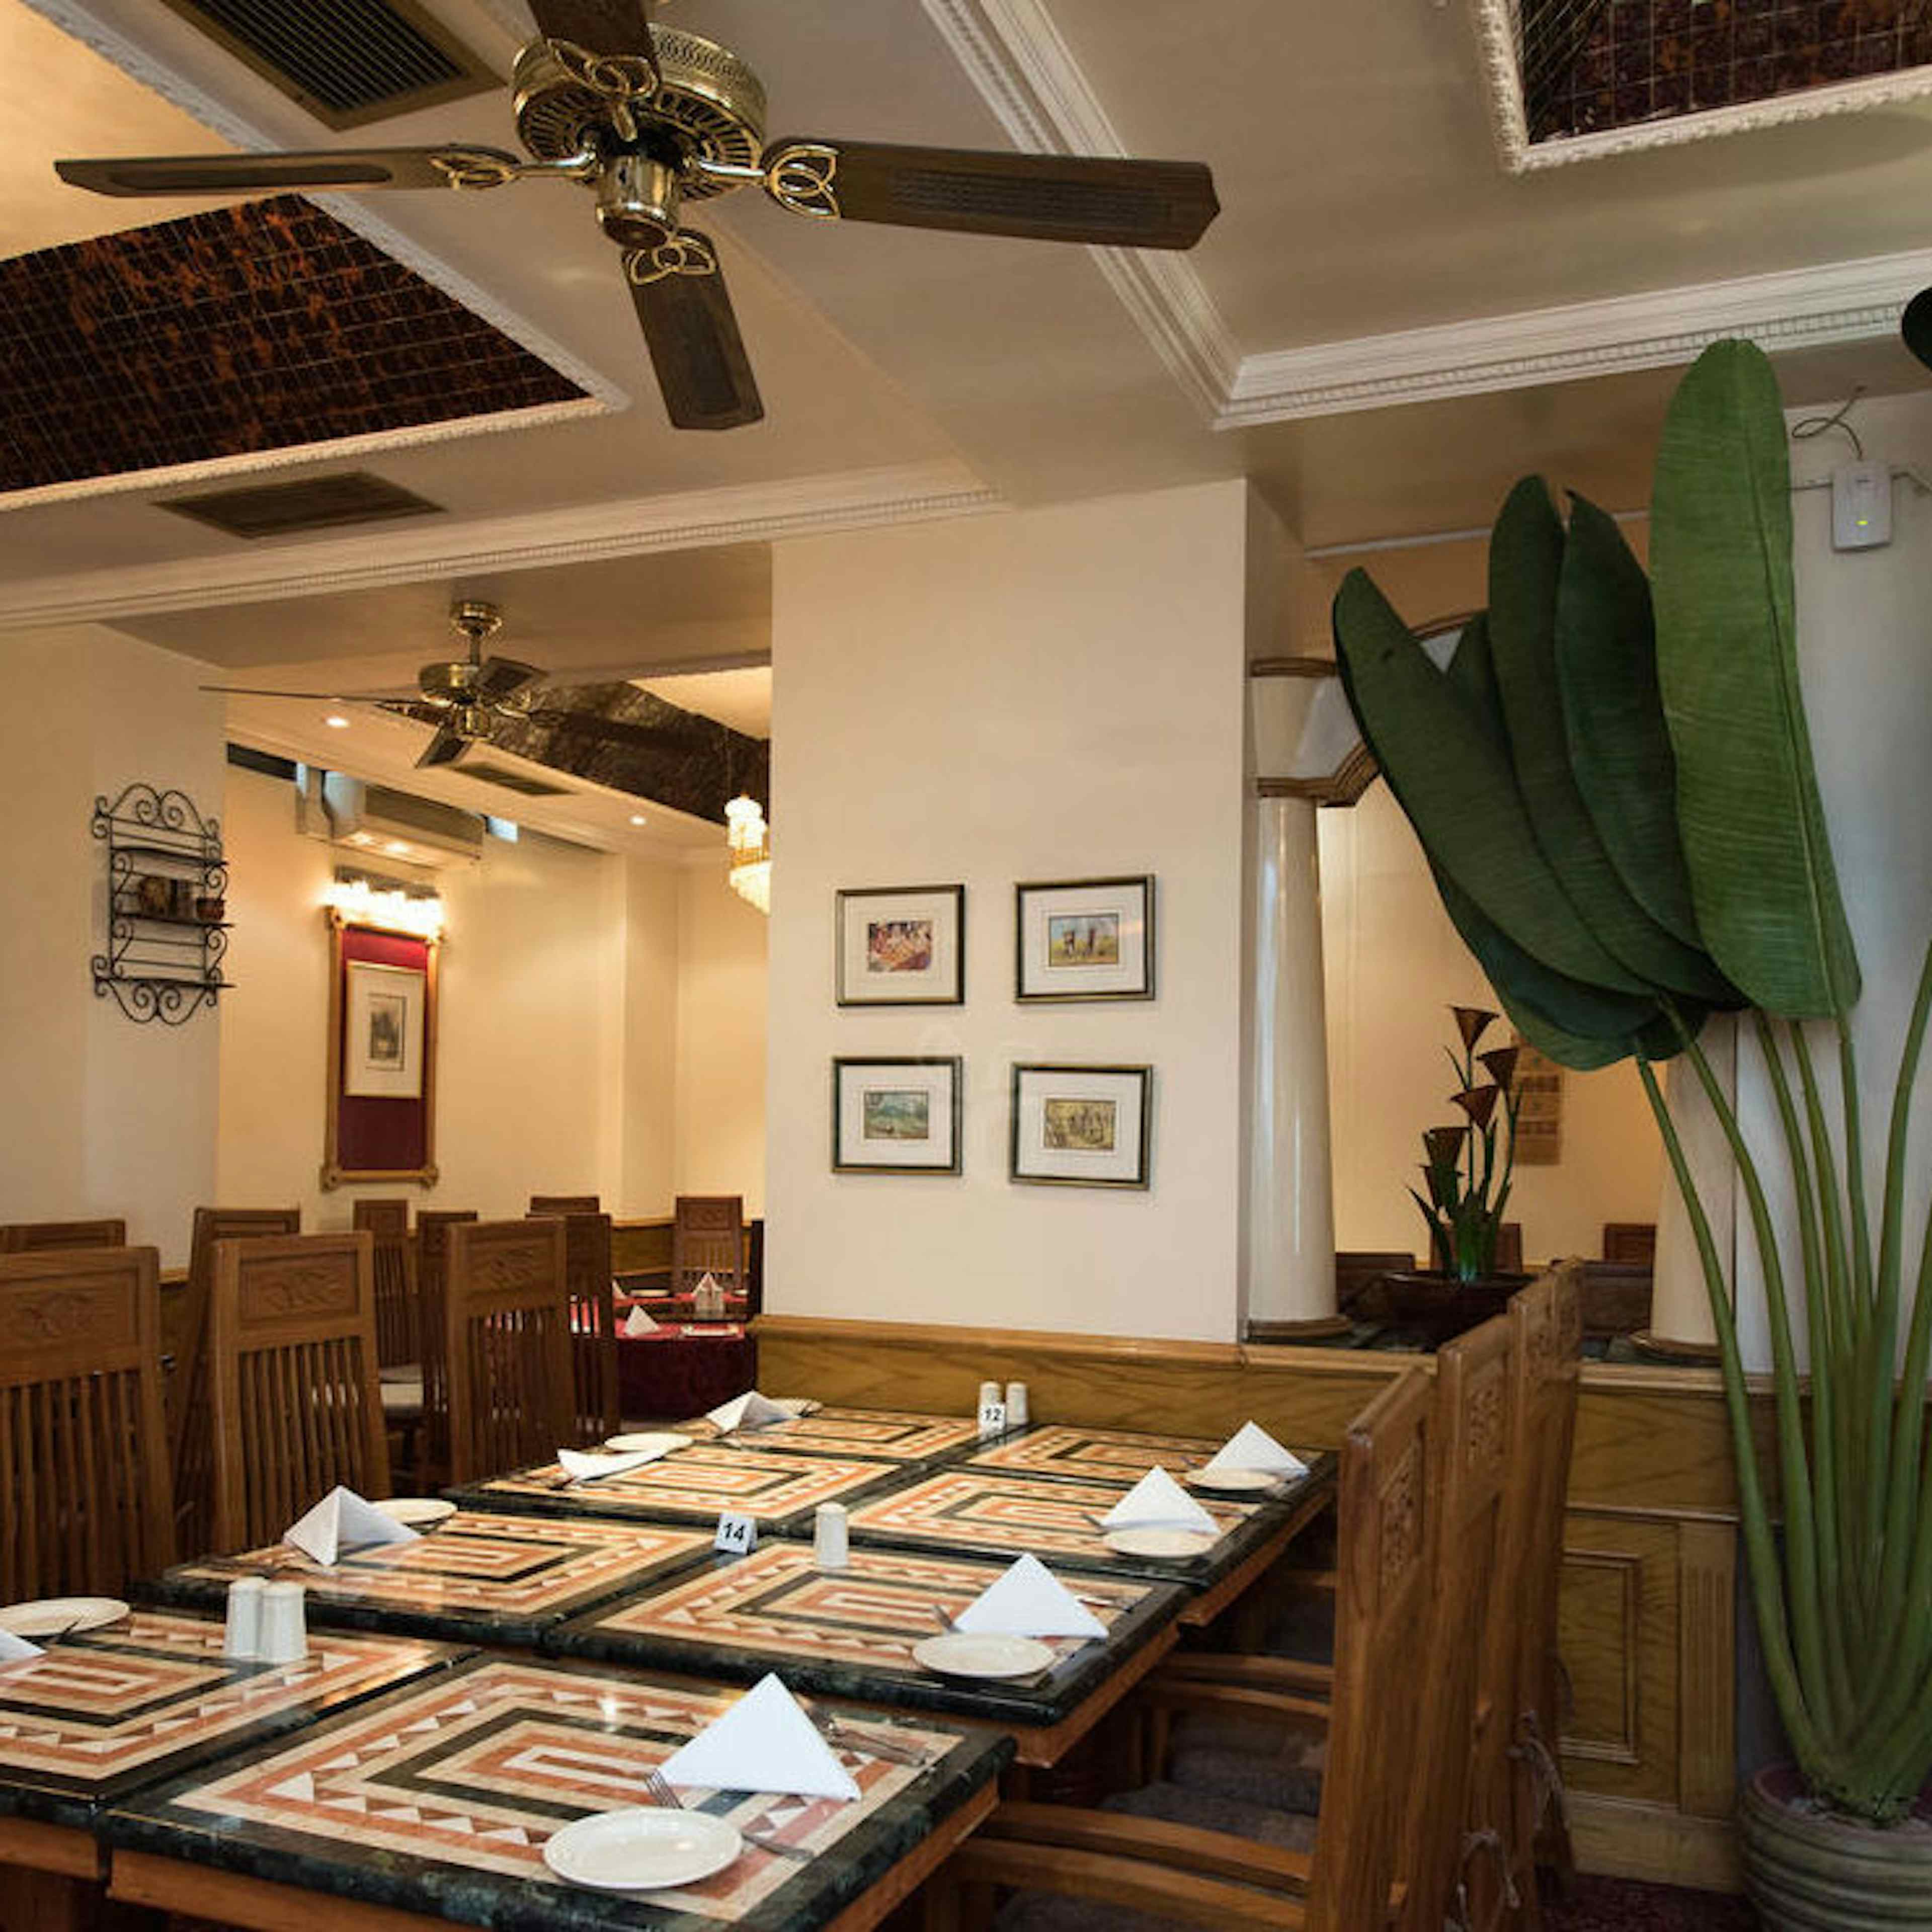 Lagenda Restaurant Bar and Dining Rooms - Restaurant image 3